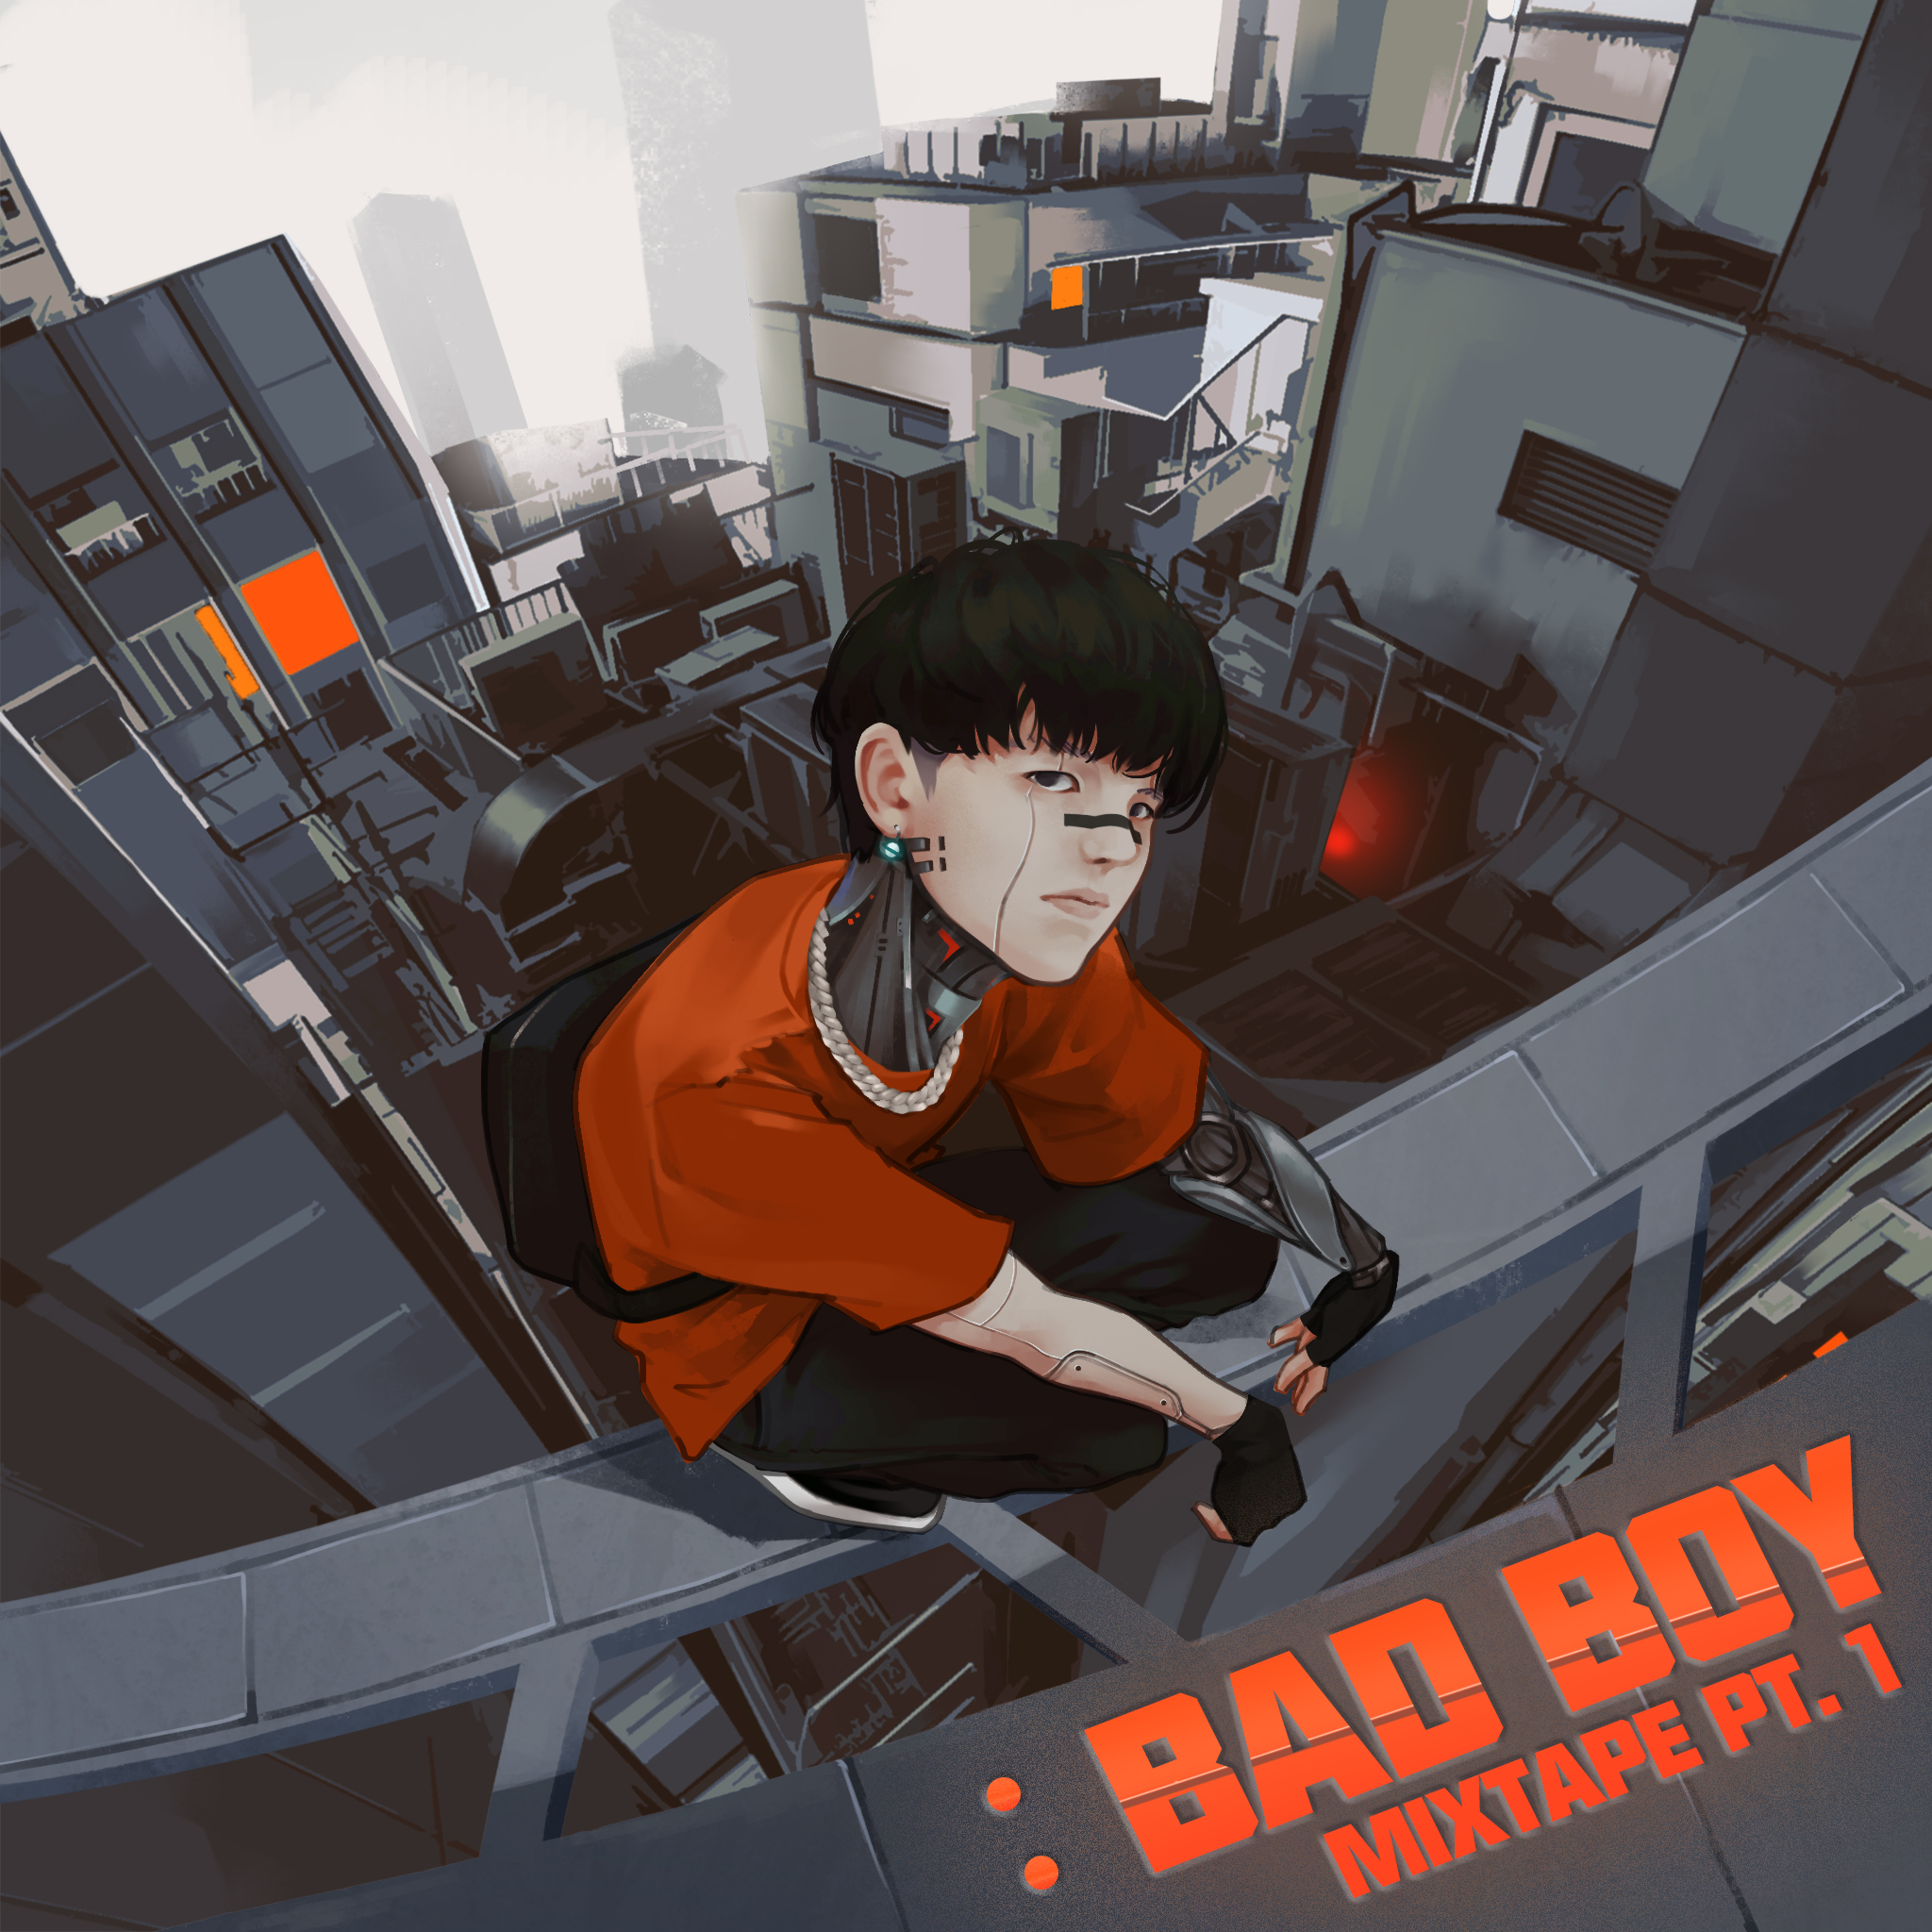 Bad boy is coming歌词 歌手侃迪kandi / Mc光光-专辑Bad boy mixtape pt.1-单曲《Bad boy is coming》LRC歌词下载